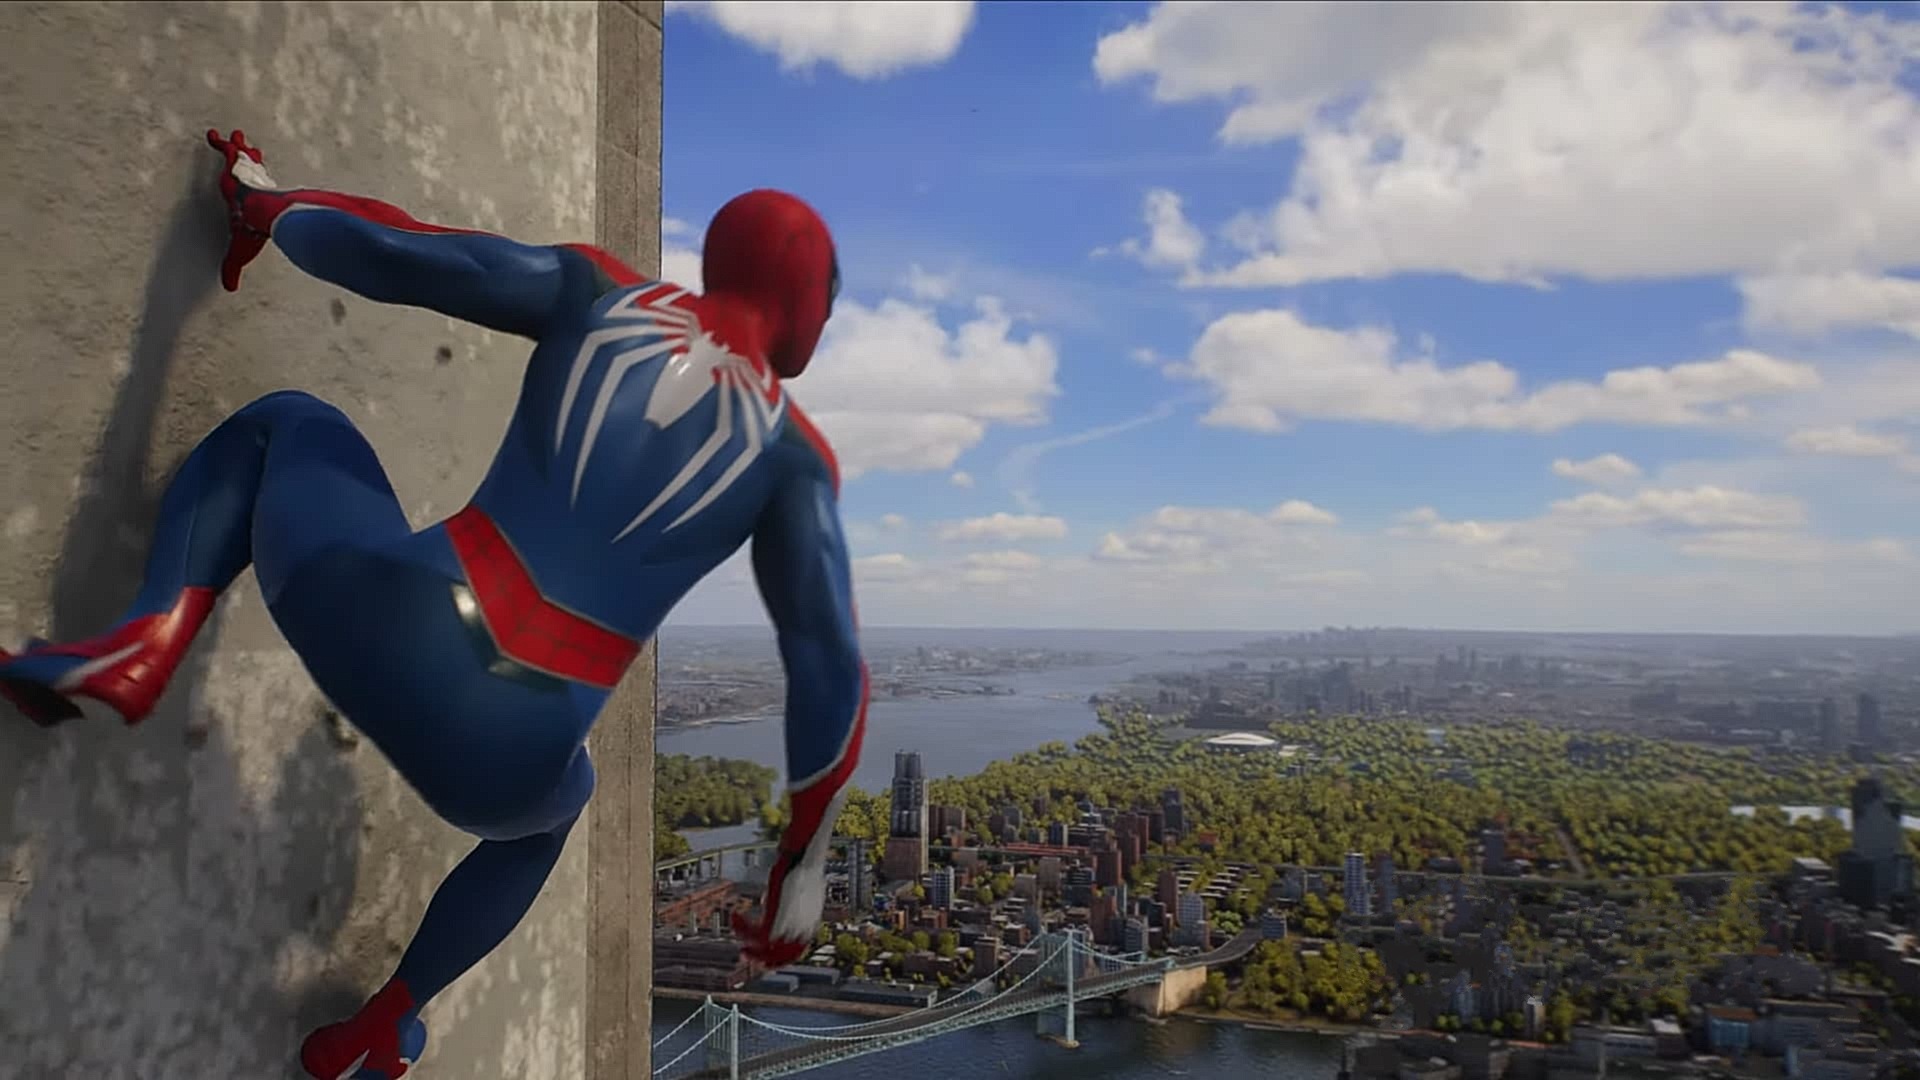 Spider-Man 2 Is The Third Best Superhero Game On Metacritic